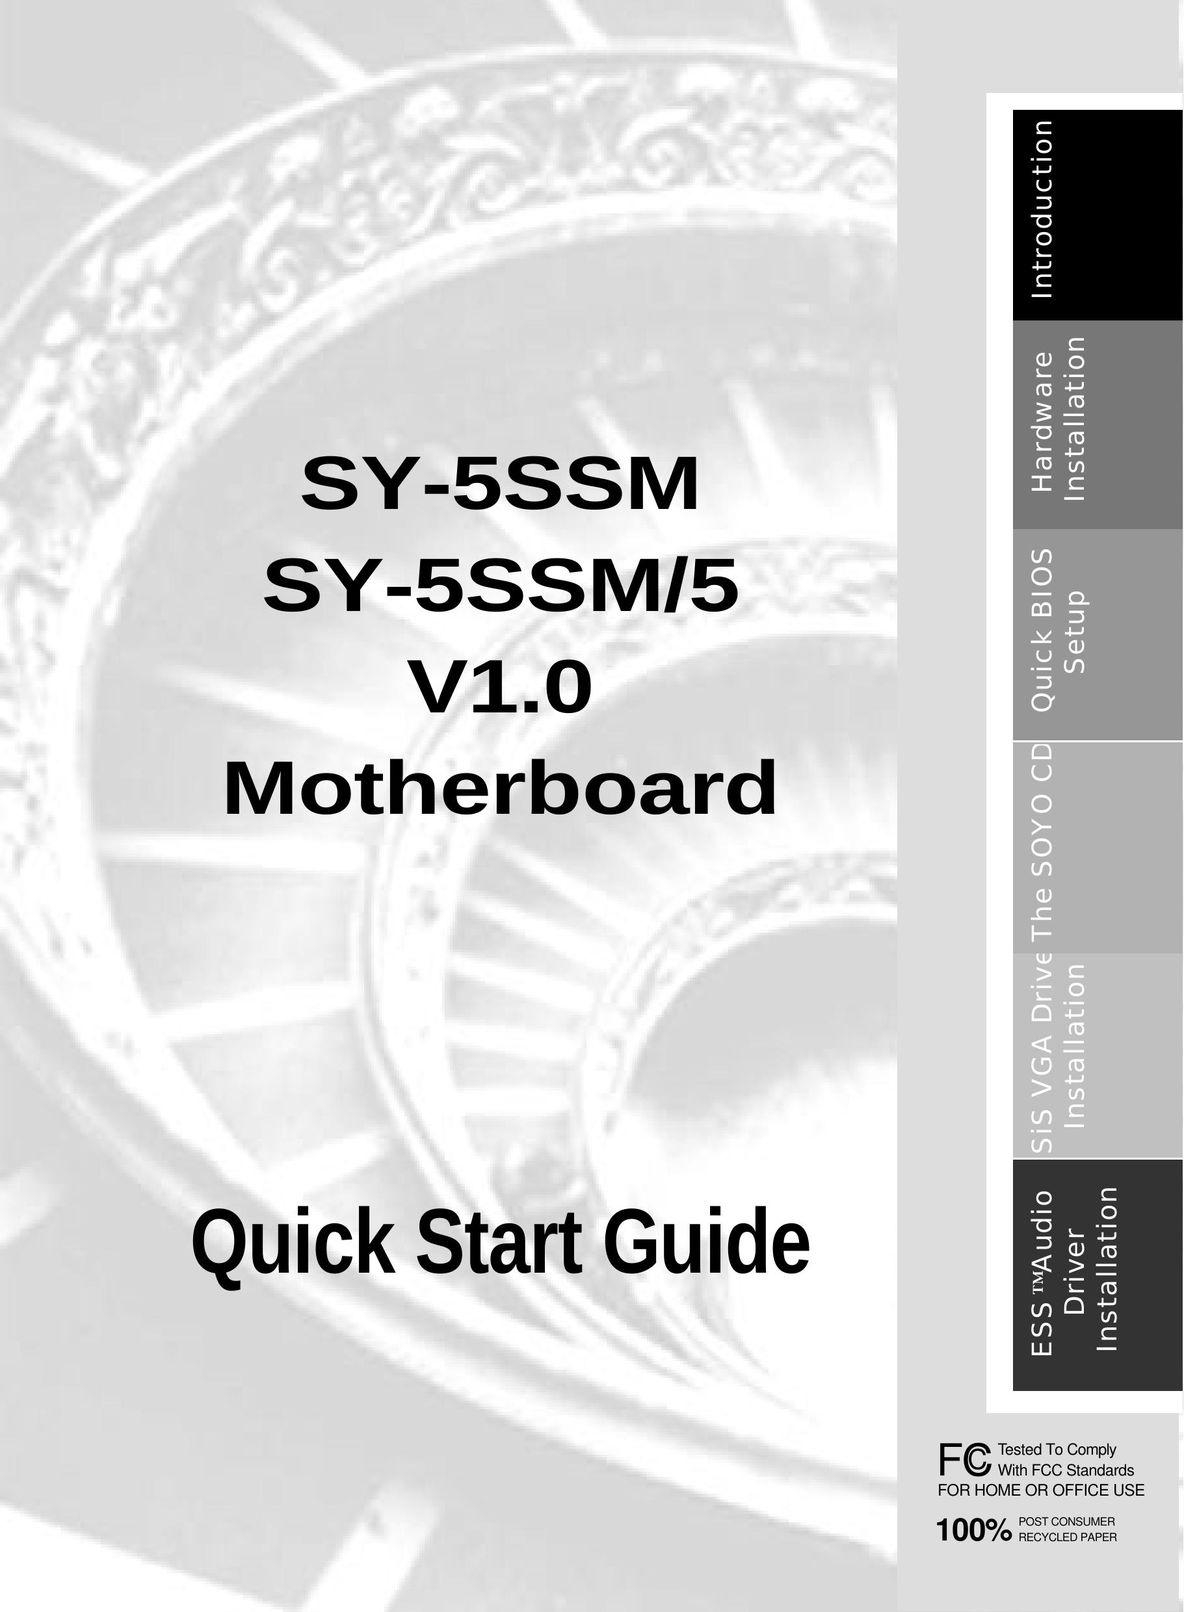 SOYO SY-5SSM/5 Computer Hardware User Manual